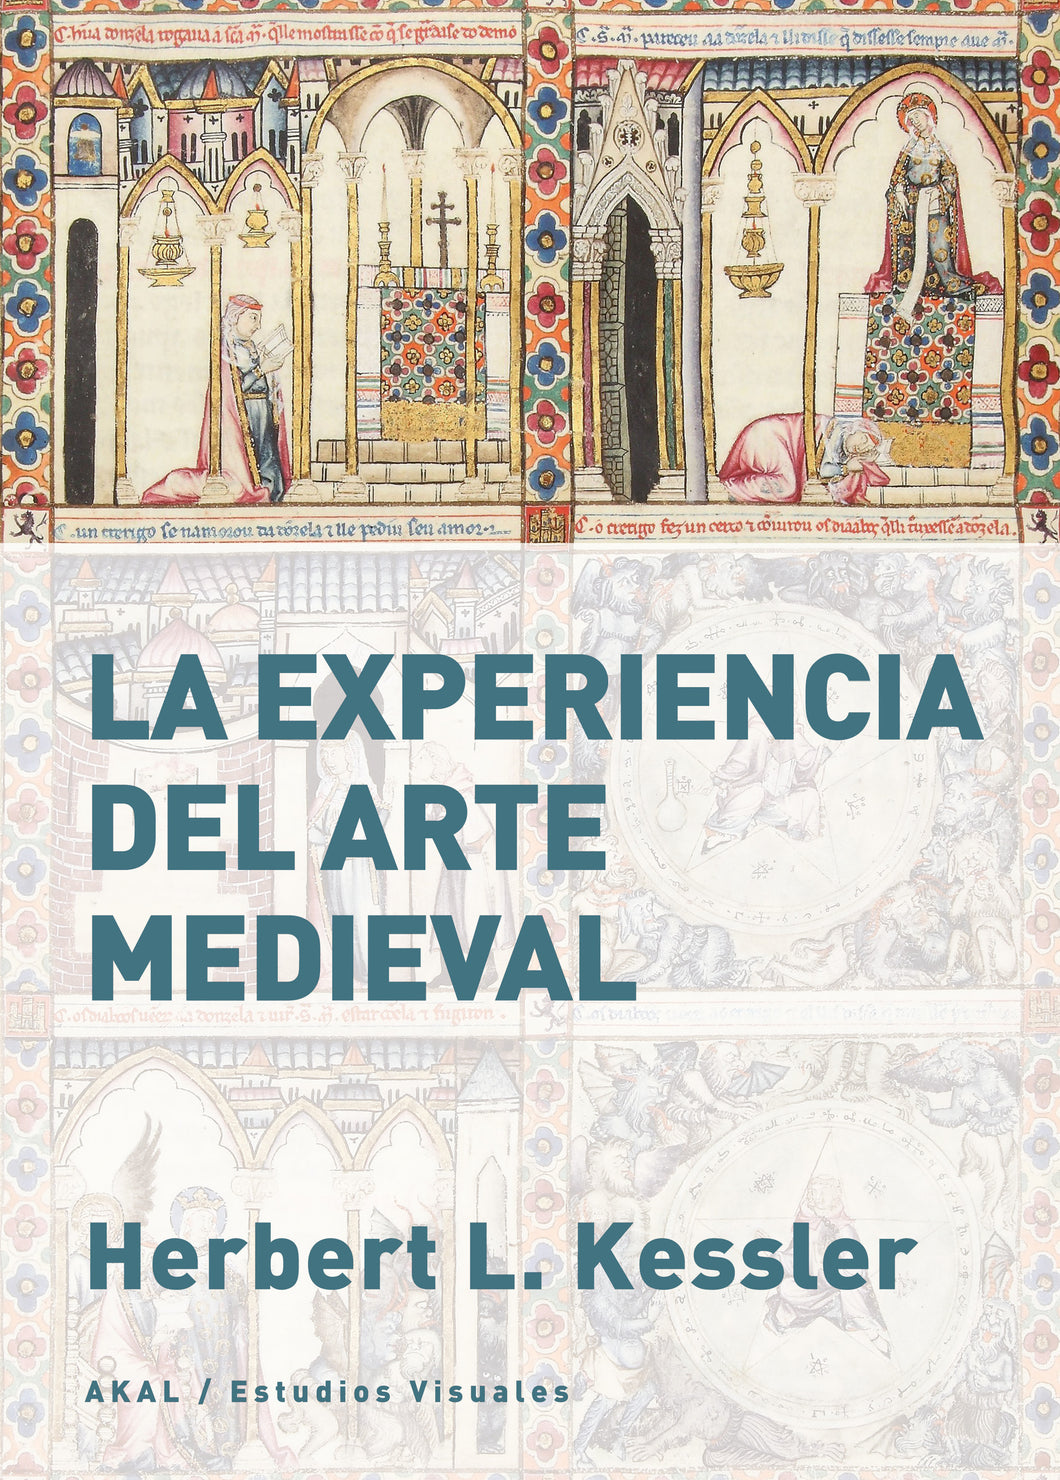 LA EXPERIENCIA DEL ARTE MEDIEVAL - Herbert L. Kessler